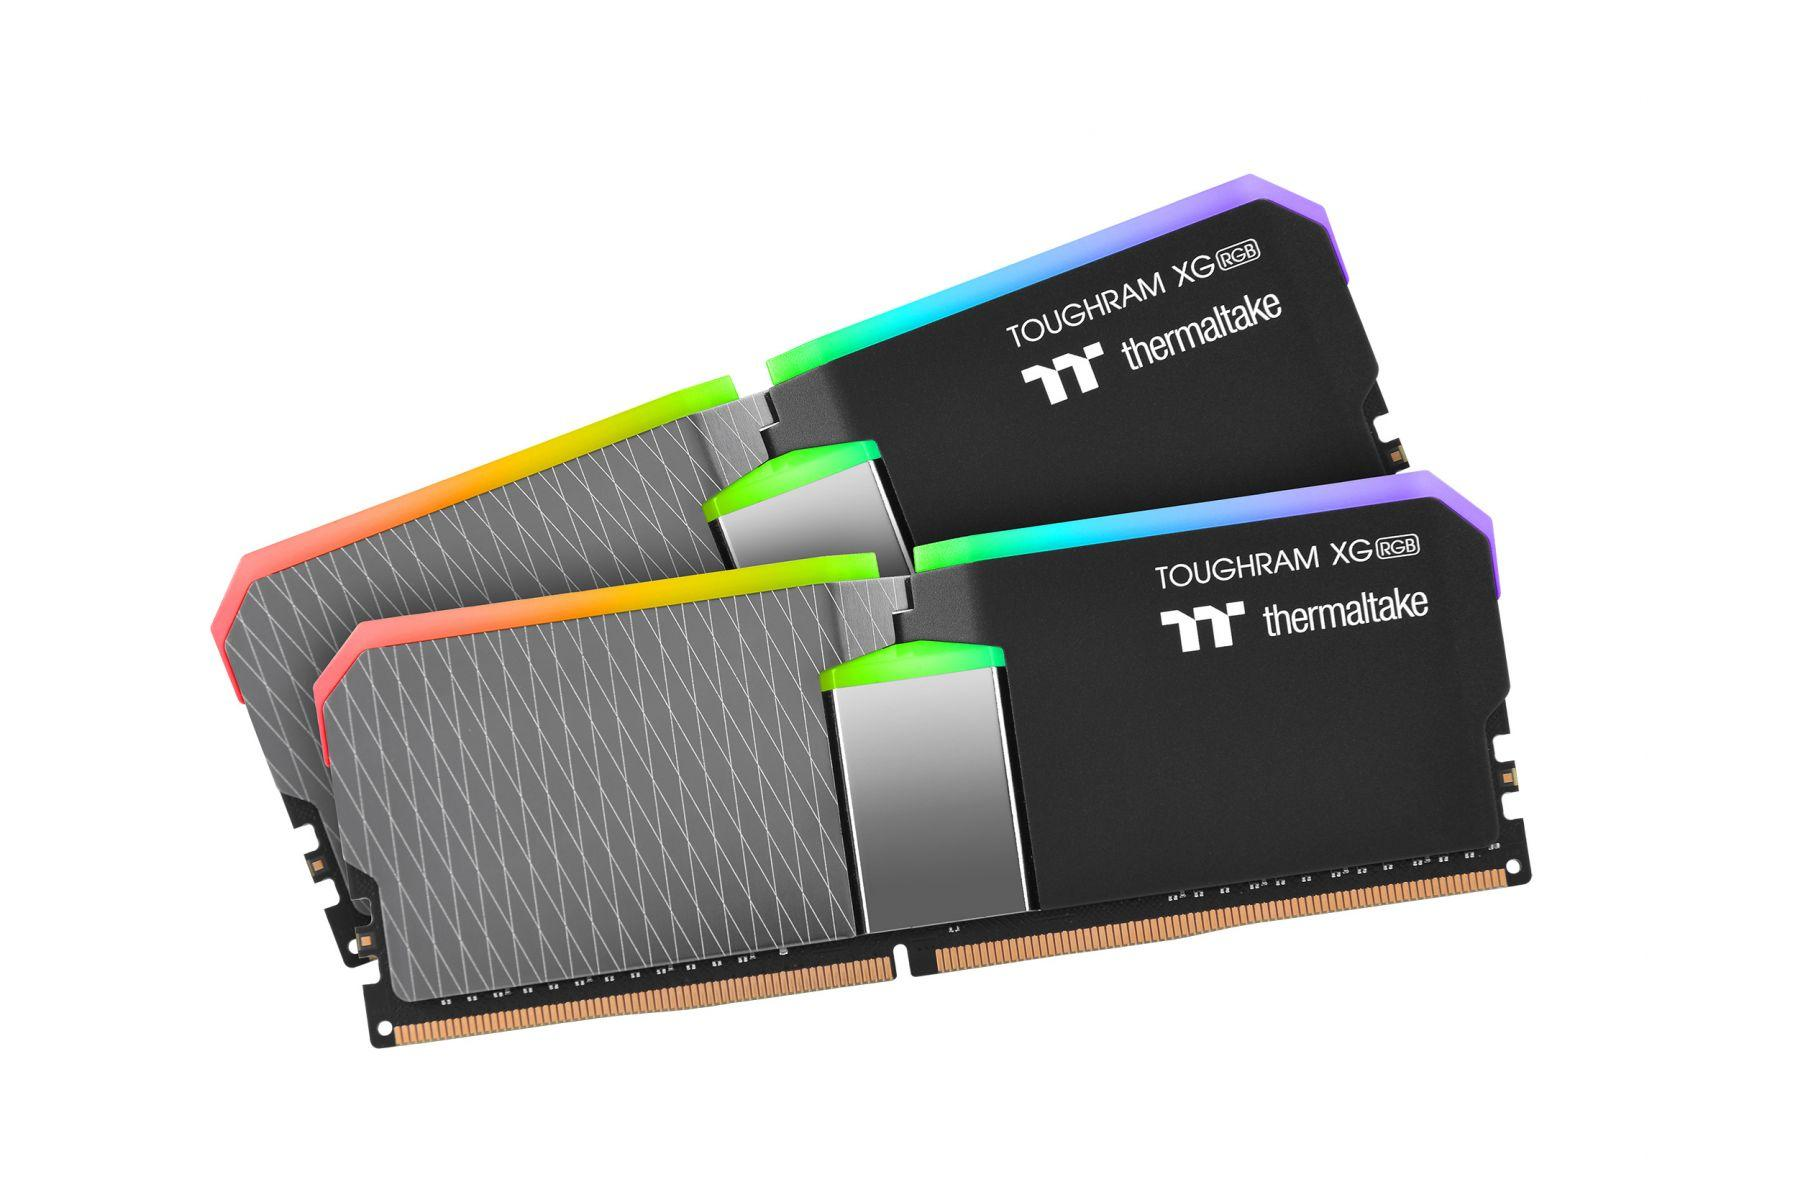 GB THERMALTAKE RGB Arbeitsspeicher 16 DDR4 XG TOUGHRAM